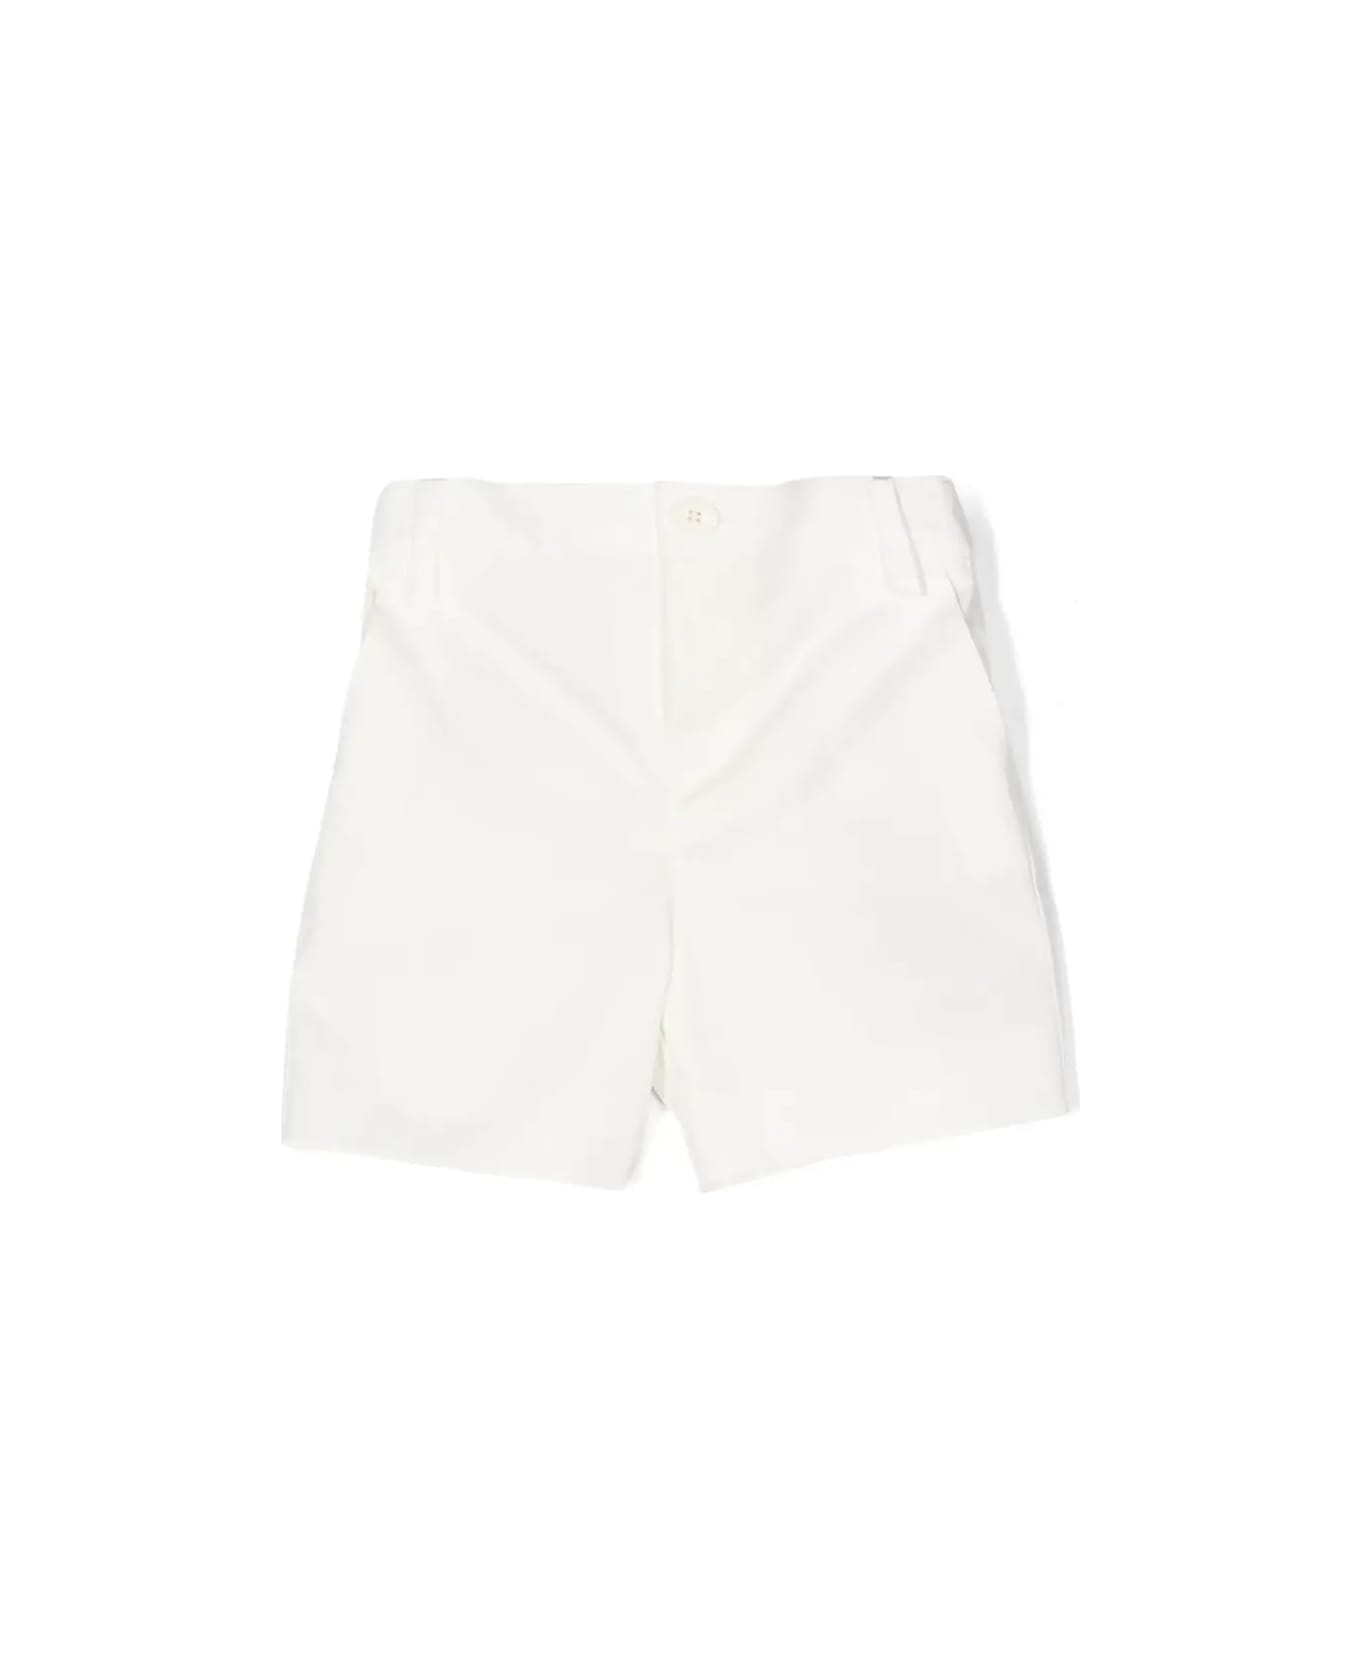 Etro White Twill Shorts With Embroidery - White